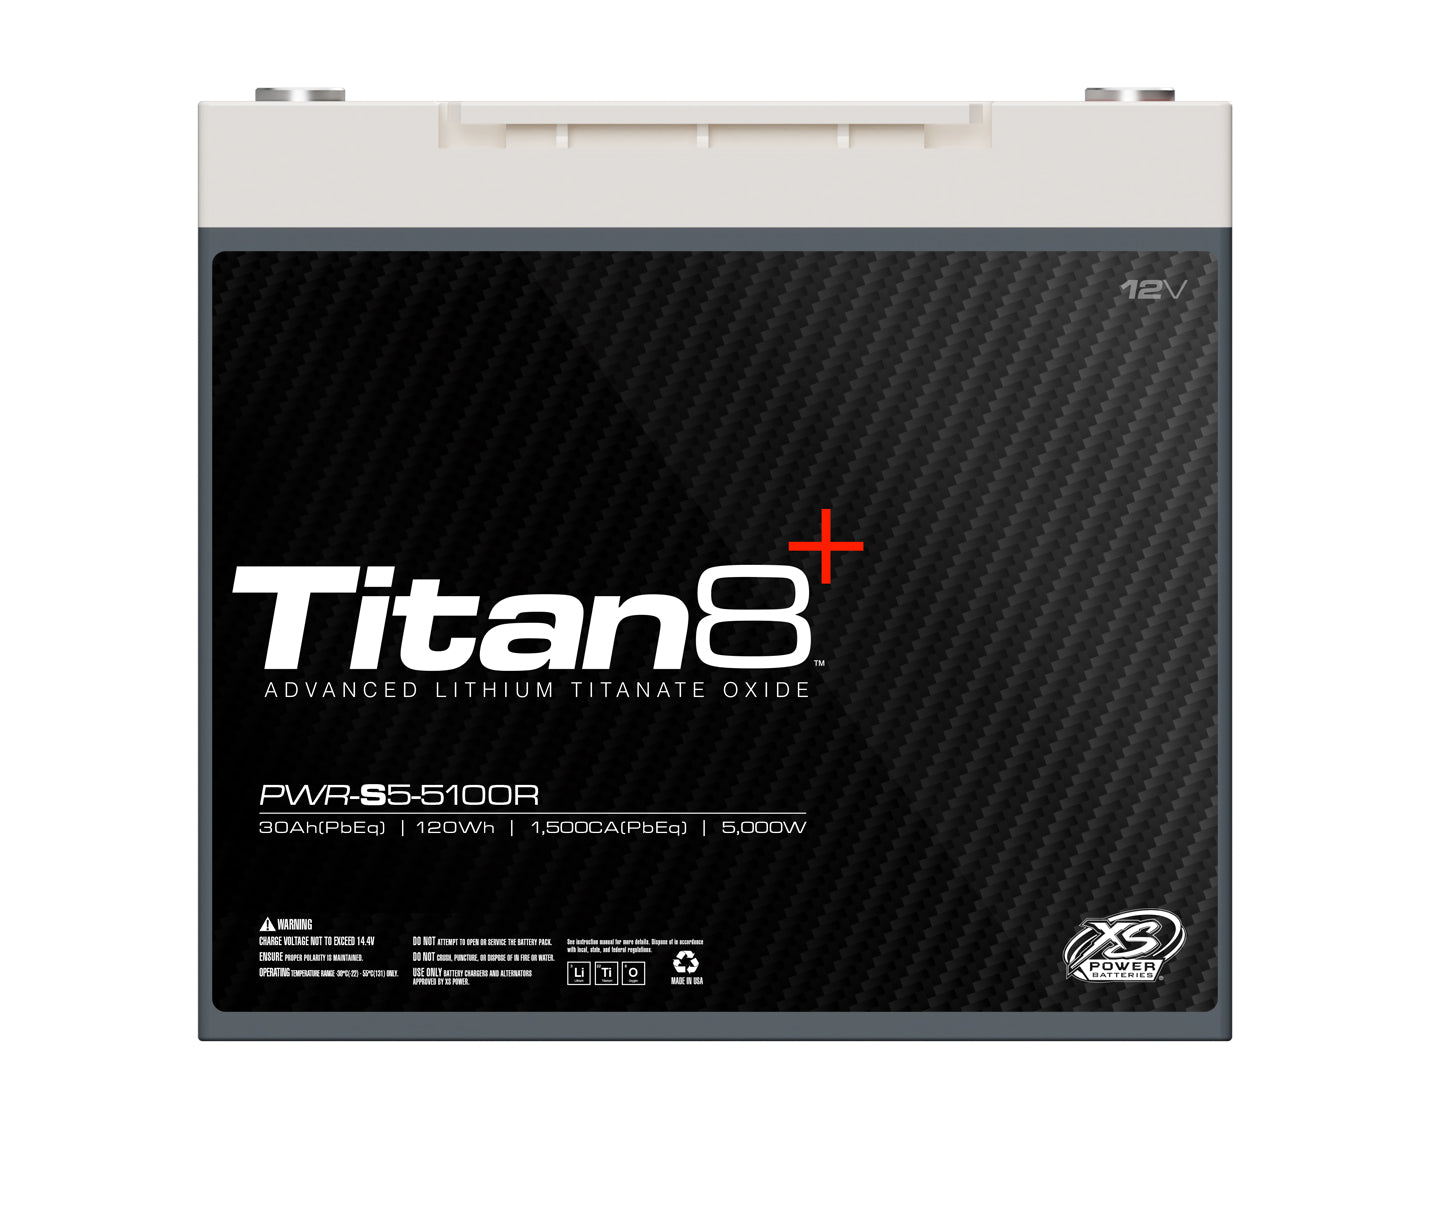 PWR-S6-5100R XS Power Titan8 14VDC Group 51R Lithium LTO Car Audio Vehicle Battery 5000W 144Wh